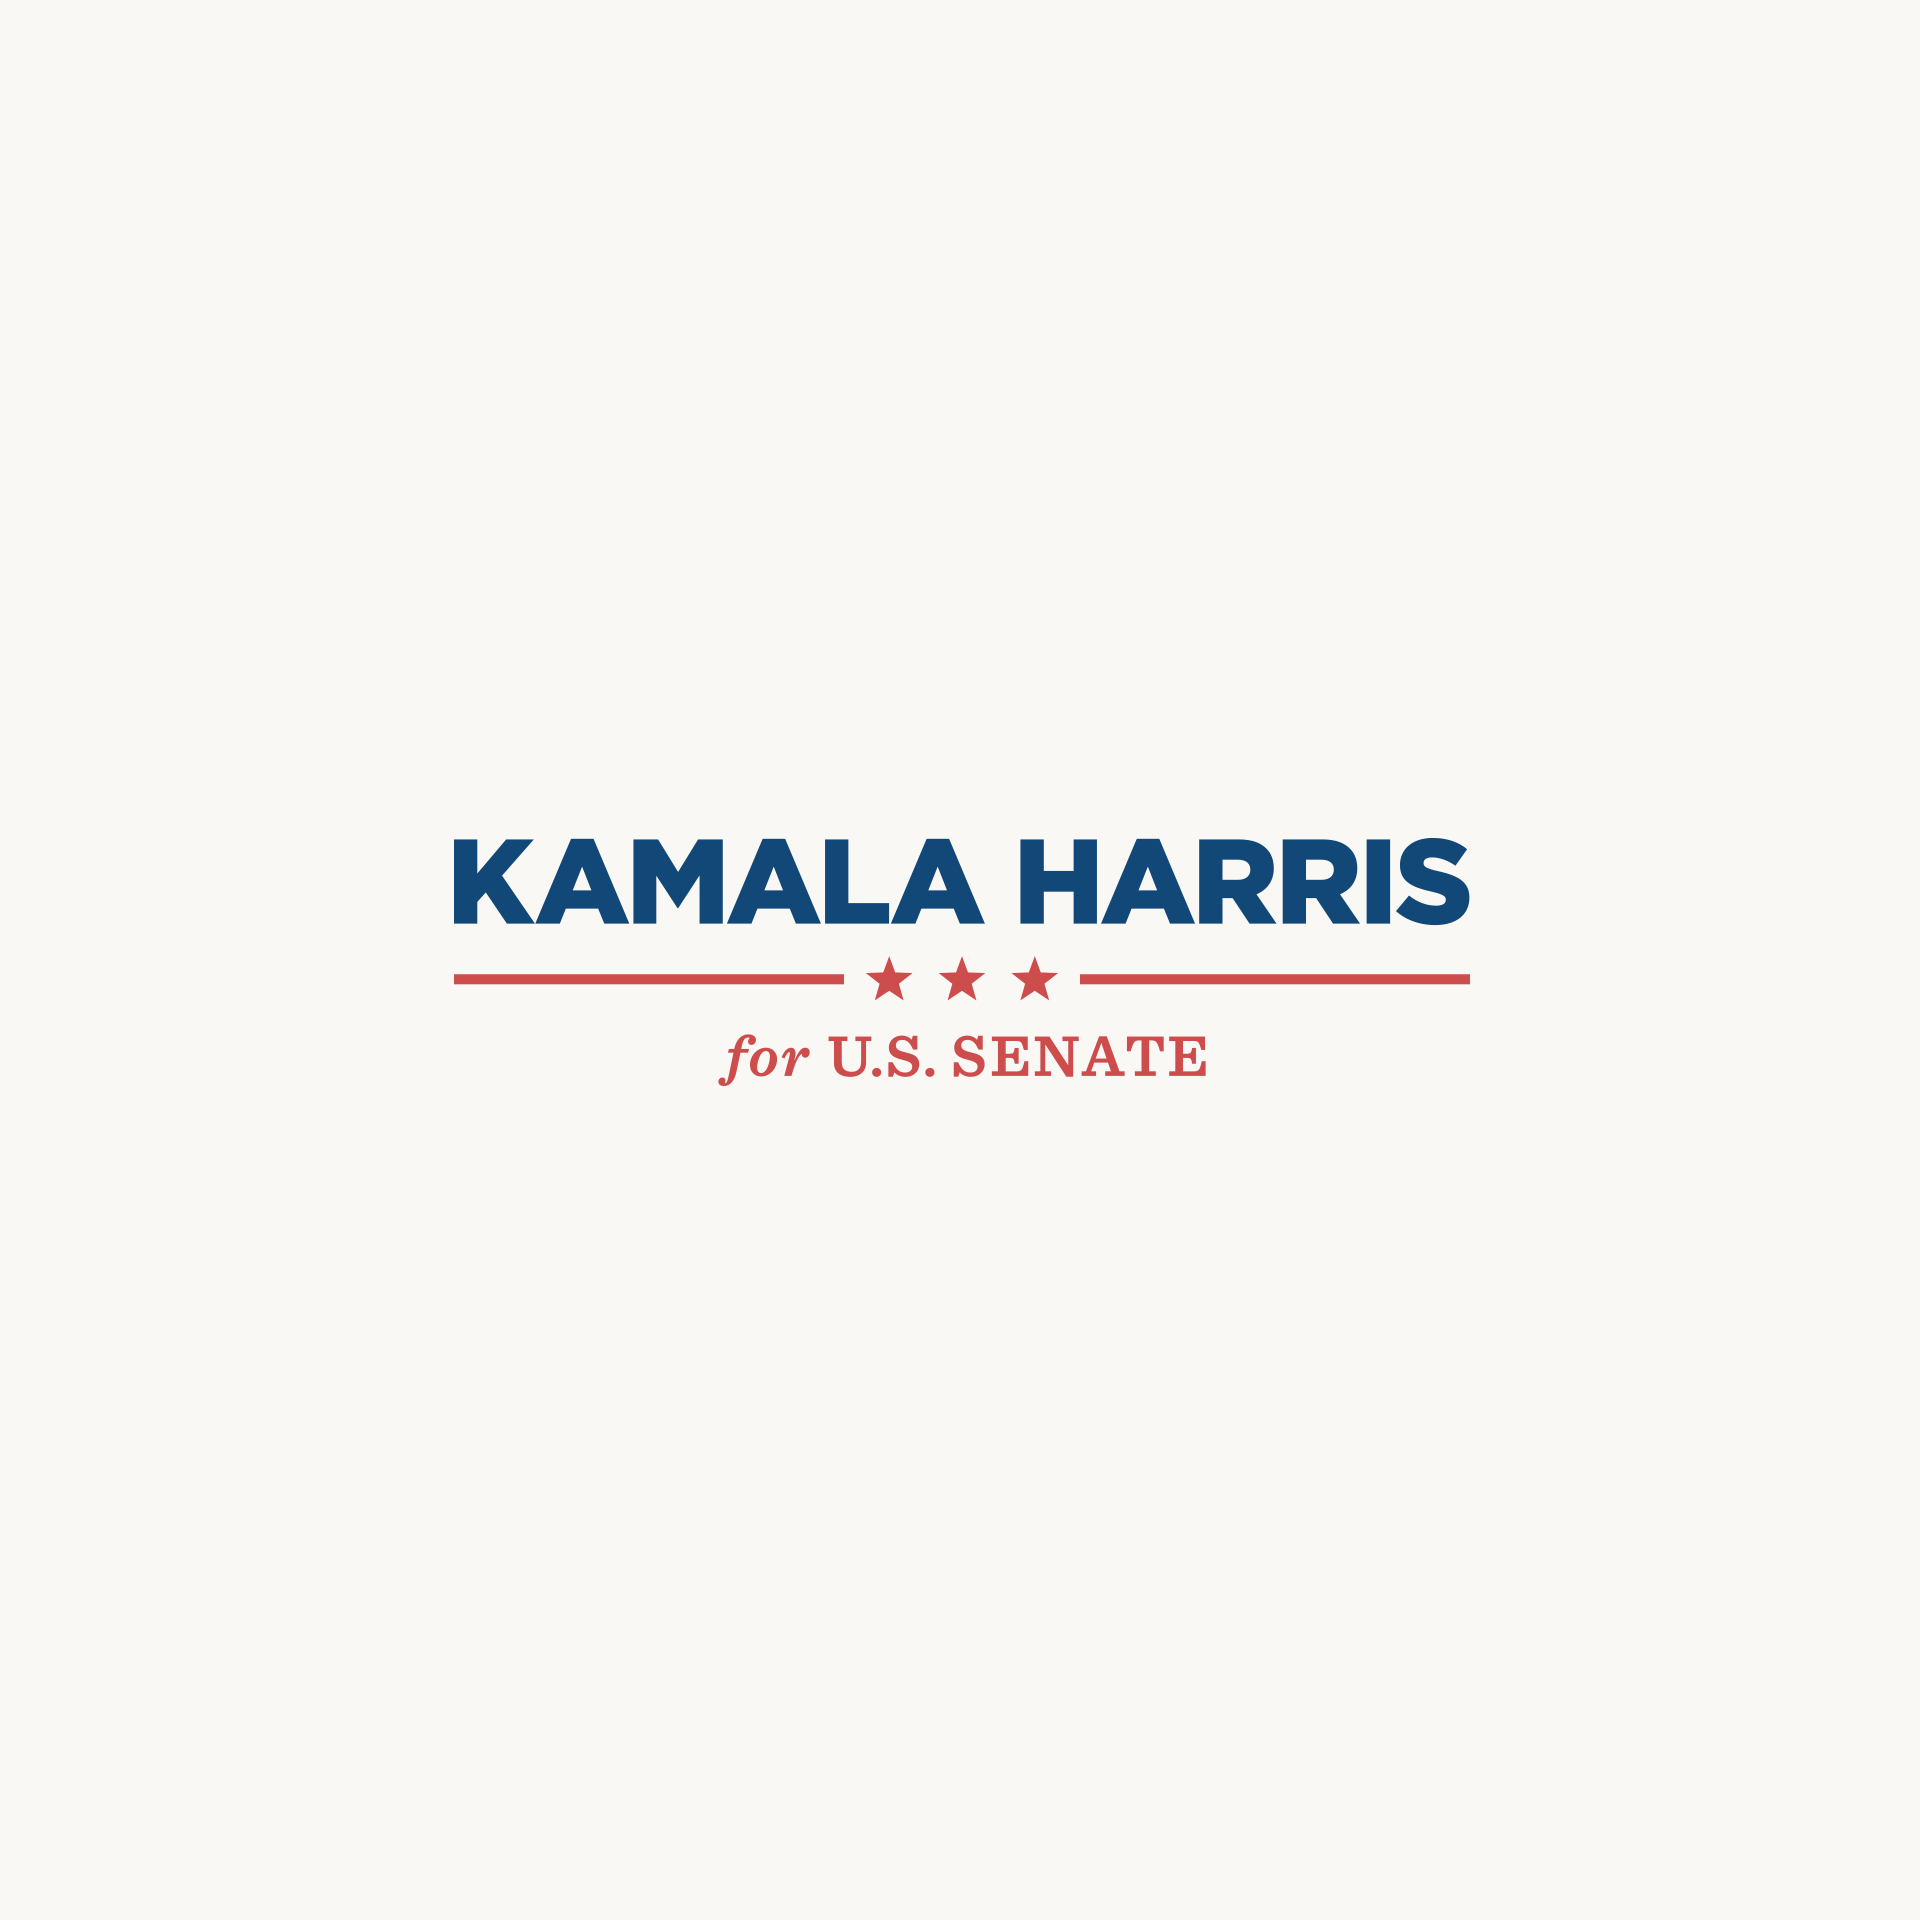 Kamala Harris for U.S. Senate logo horizontal